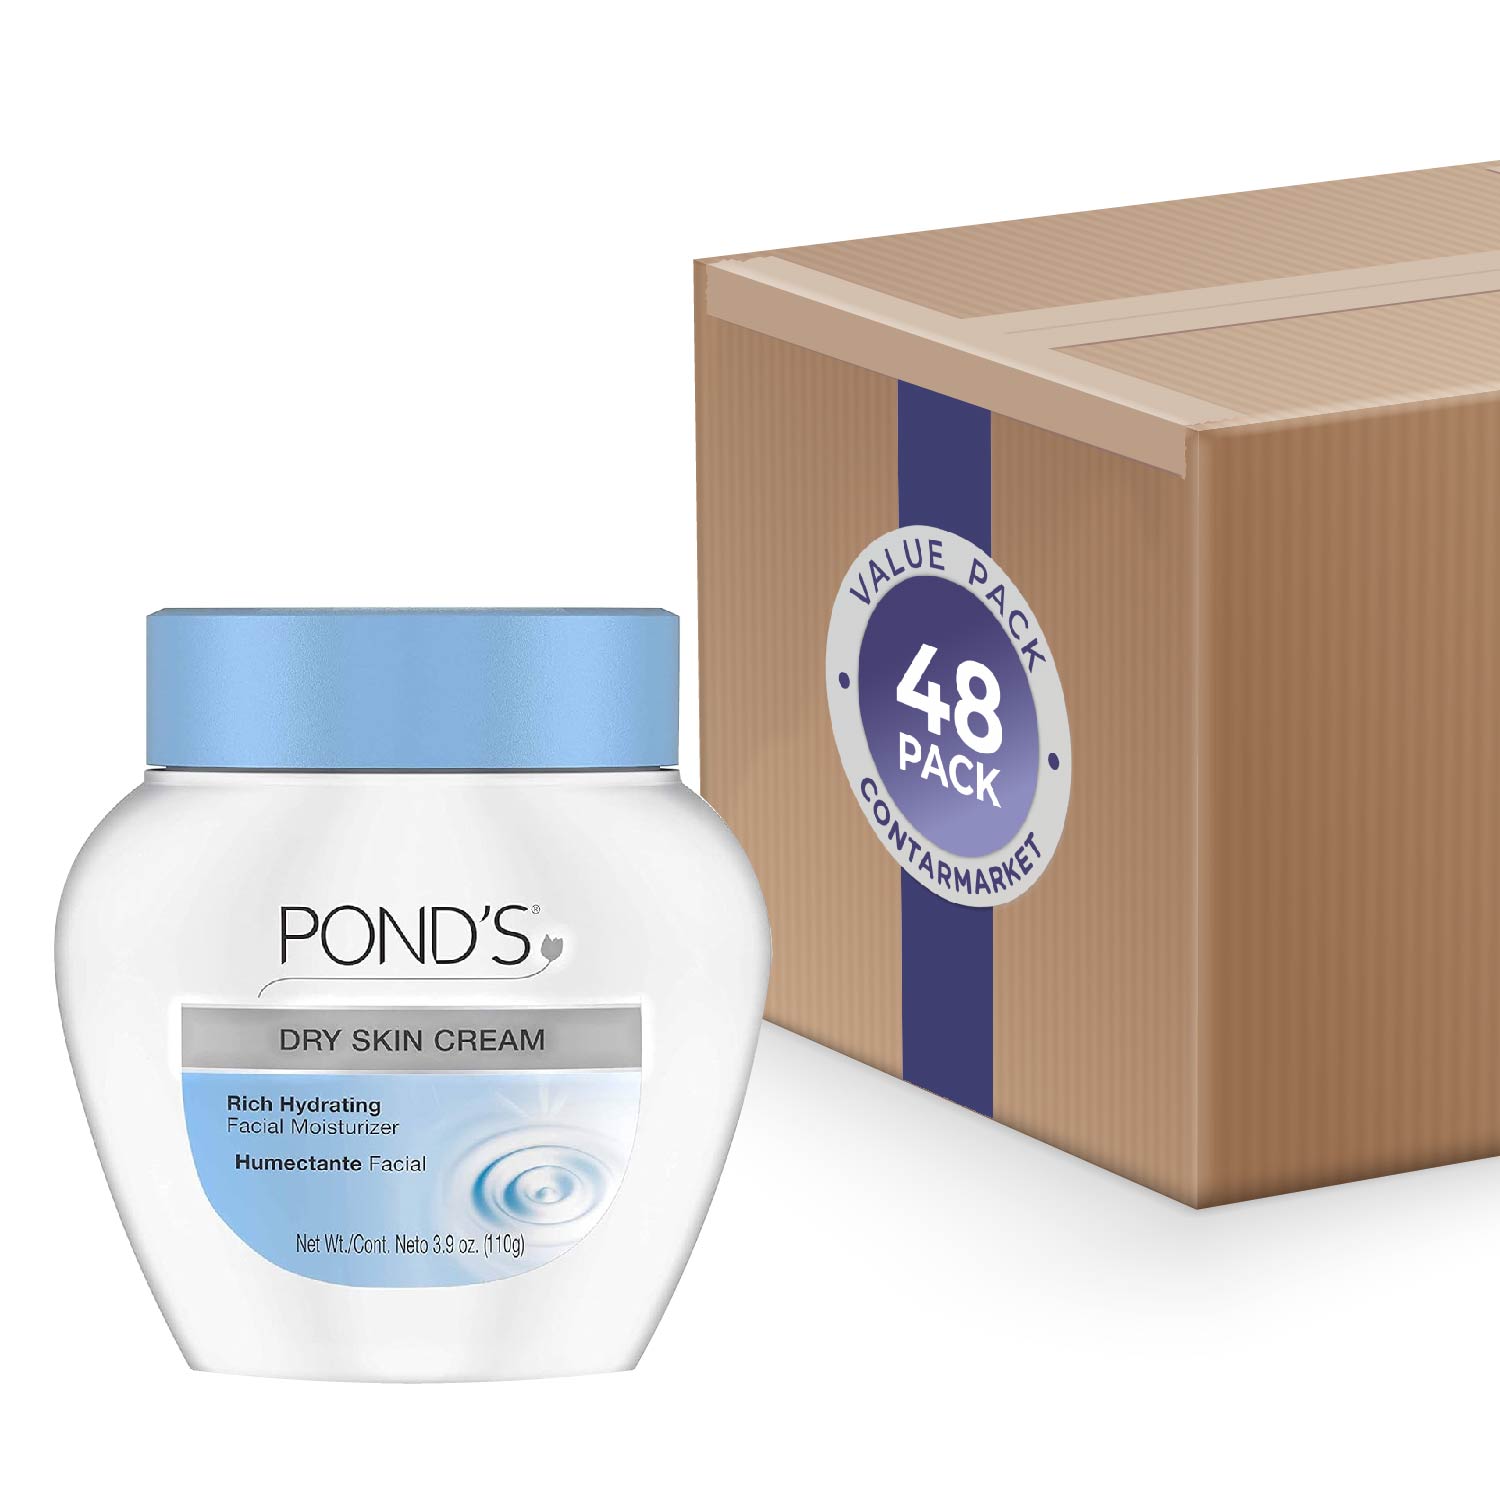 Pond's Dry Skin Cream 3.9 oz - 48 Pack